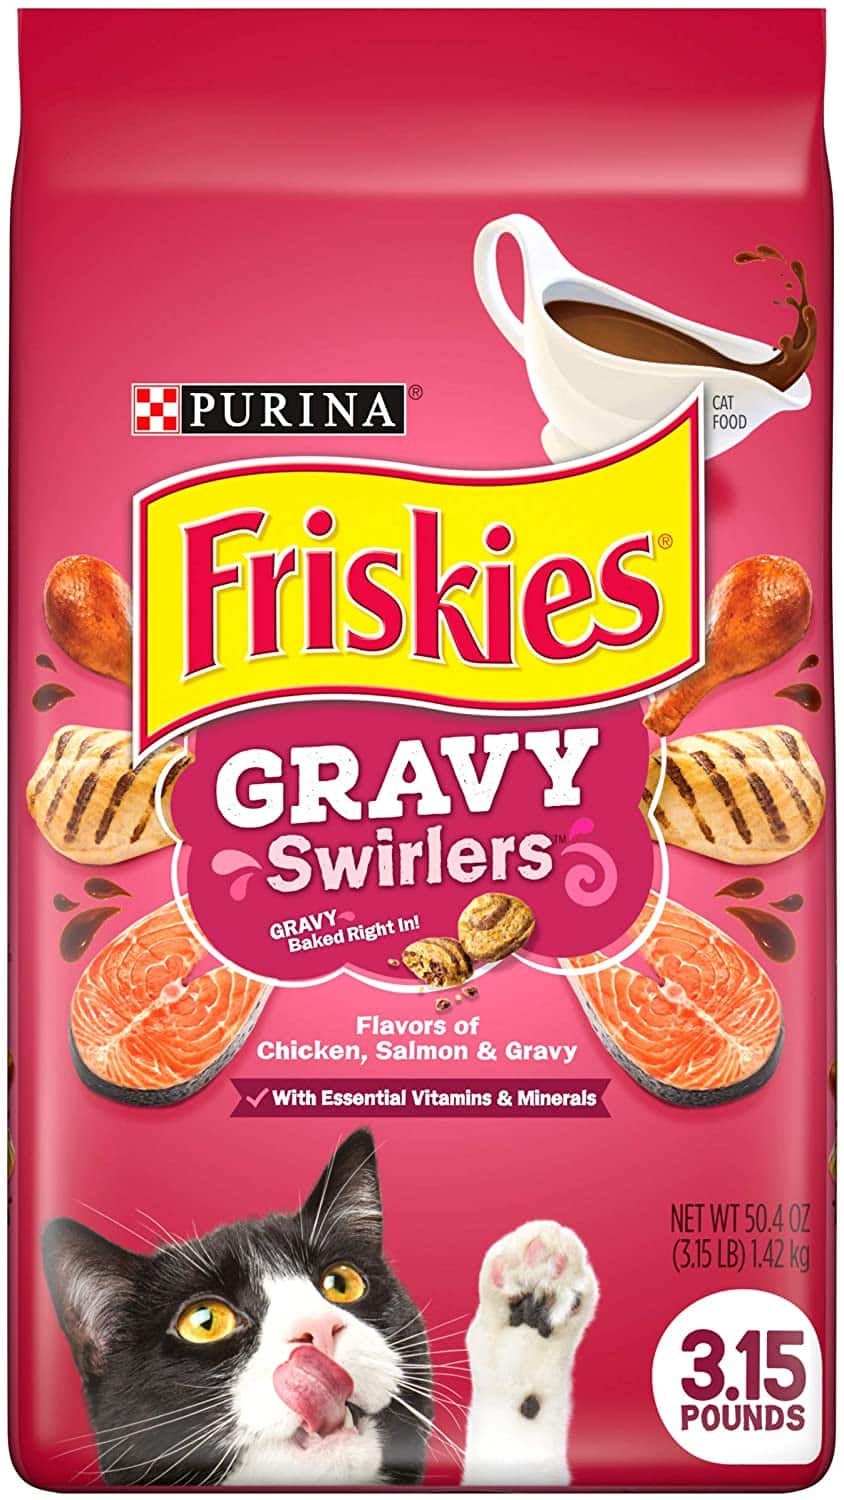 Purina Friskies Gravy Swirlers Adult Dry Cat Food $3.94 (REG $9.99)